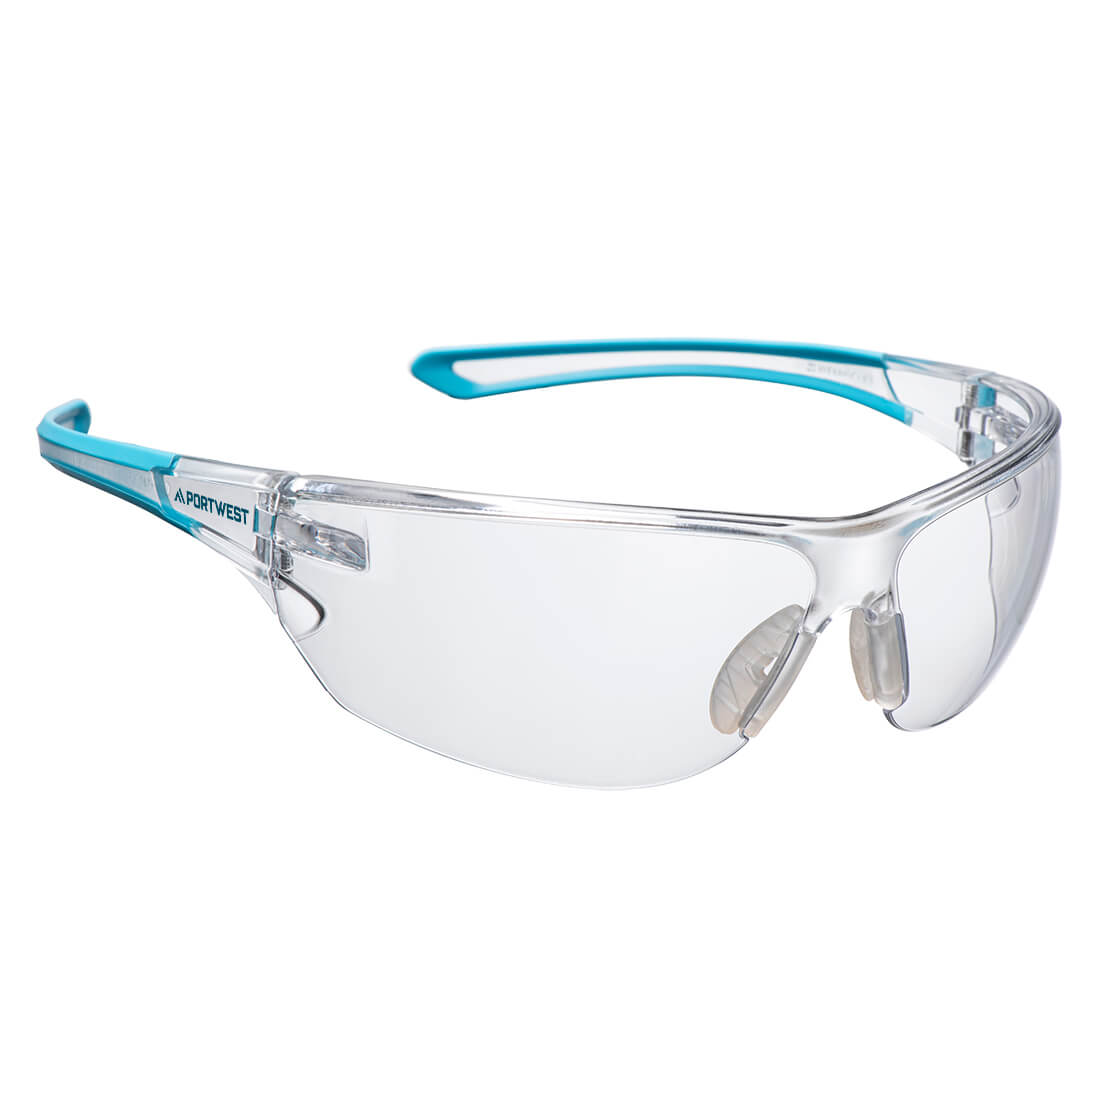 Supra KN Safety Glasses